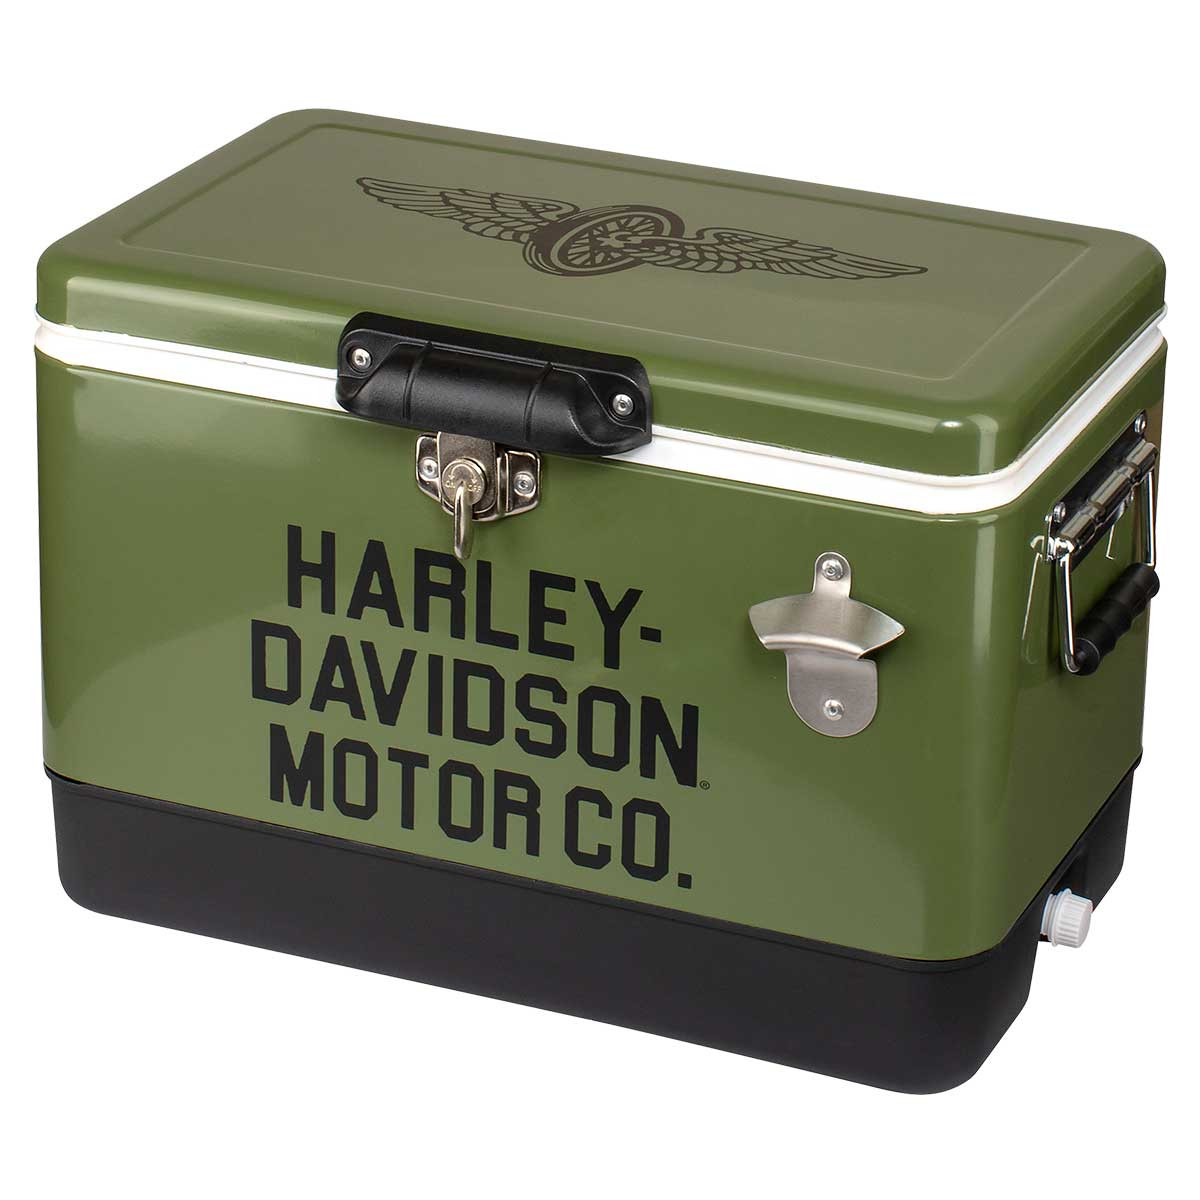 HARLEY DAVIDSON MOTOR CO. RETRO